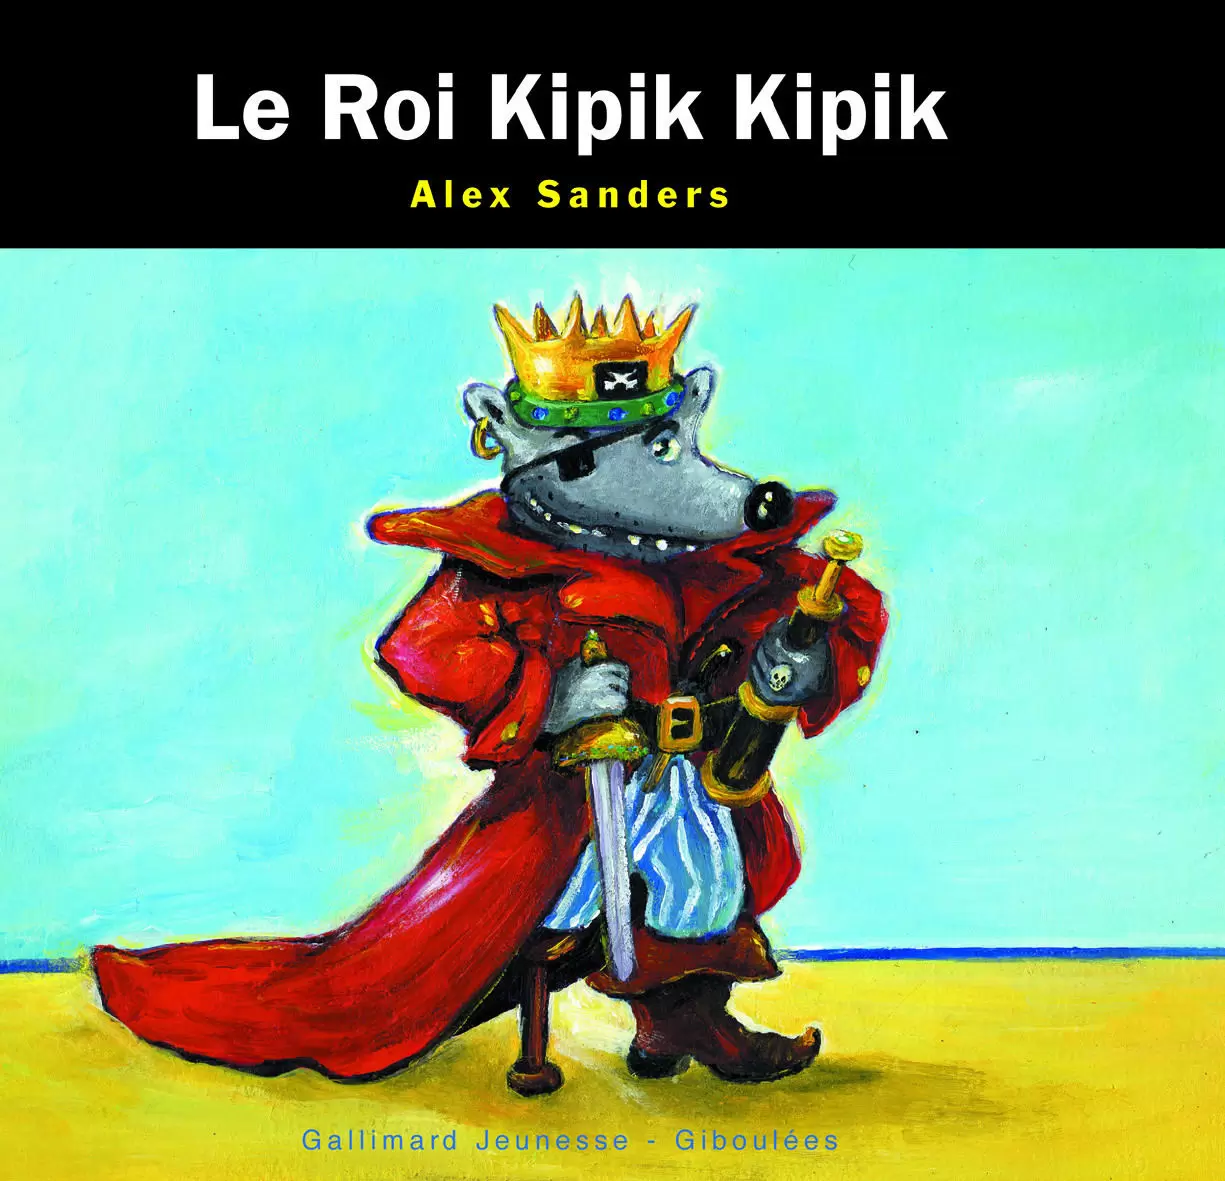 Les Rois Les Reines - Le Roi Kipik Kipik